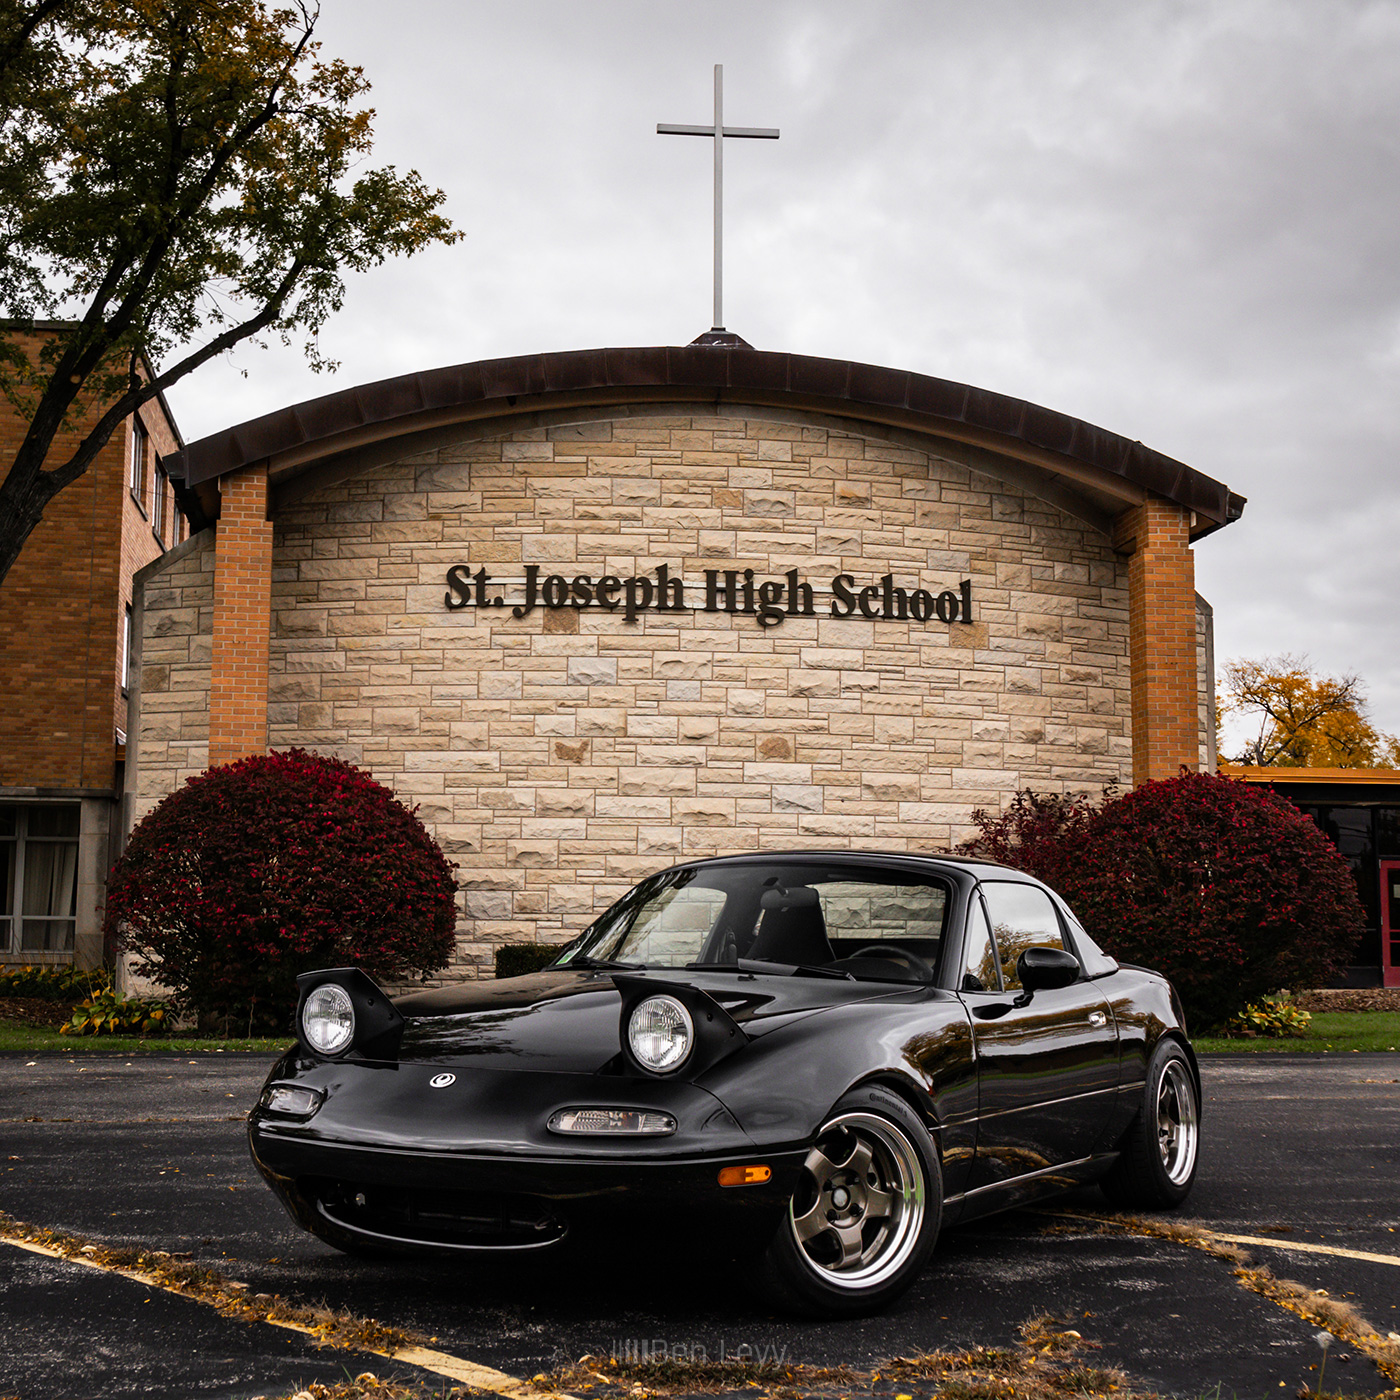 Black Mazda Miata with Hardtop in front of St. Joseph High School